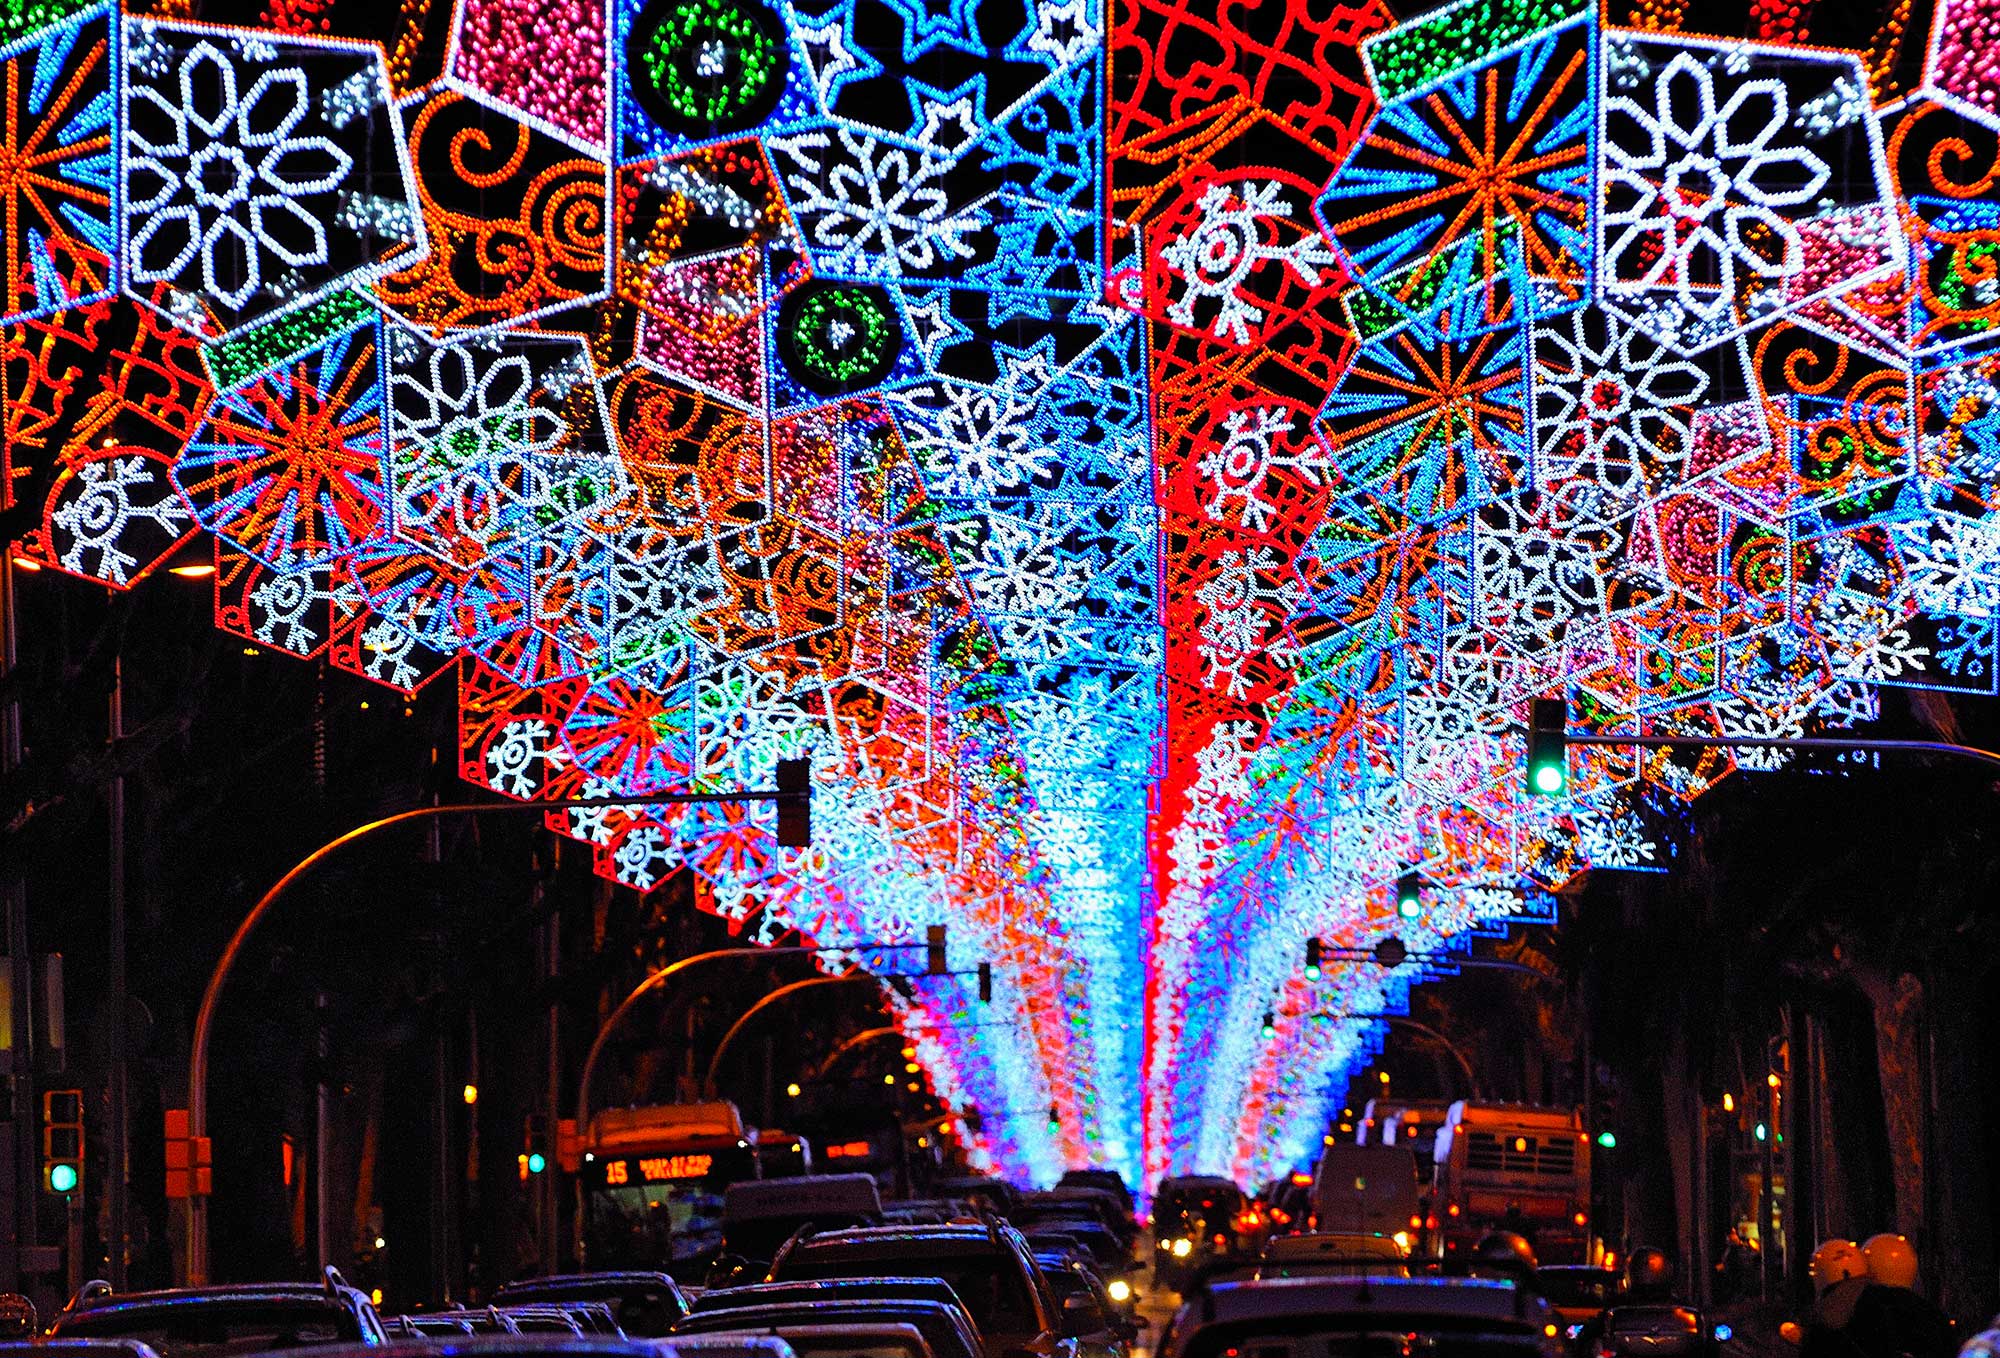 Barcelona street photography course, Christmas lights